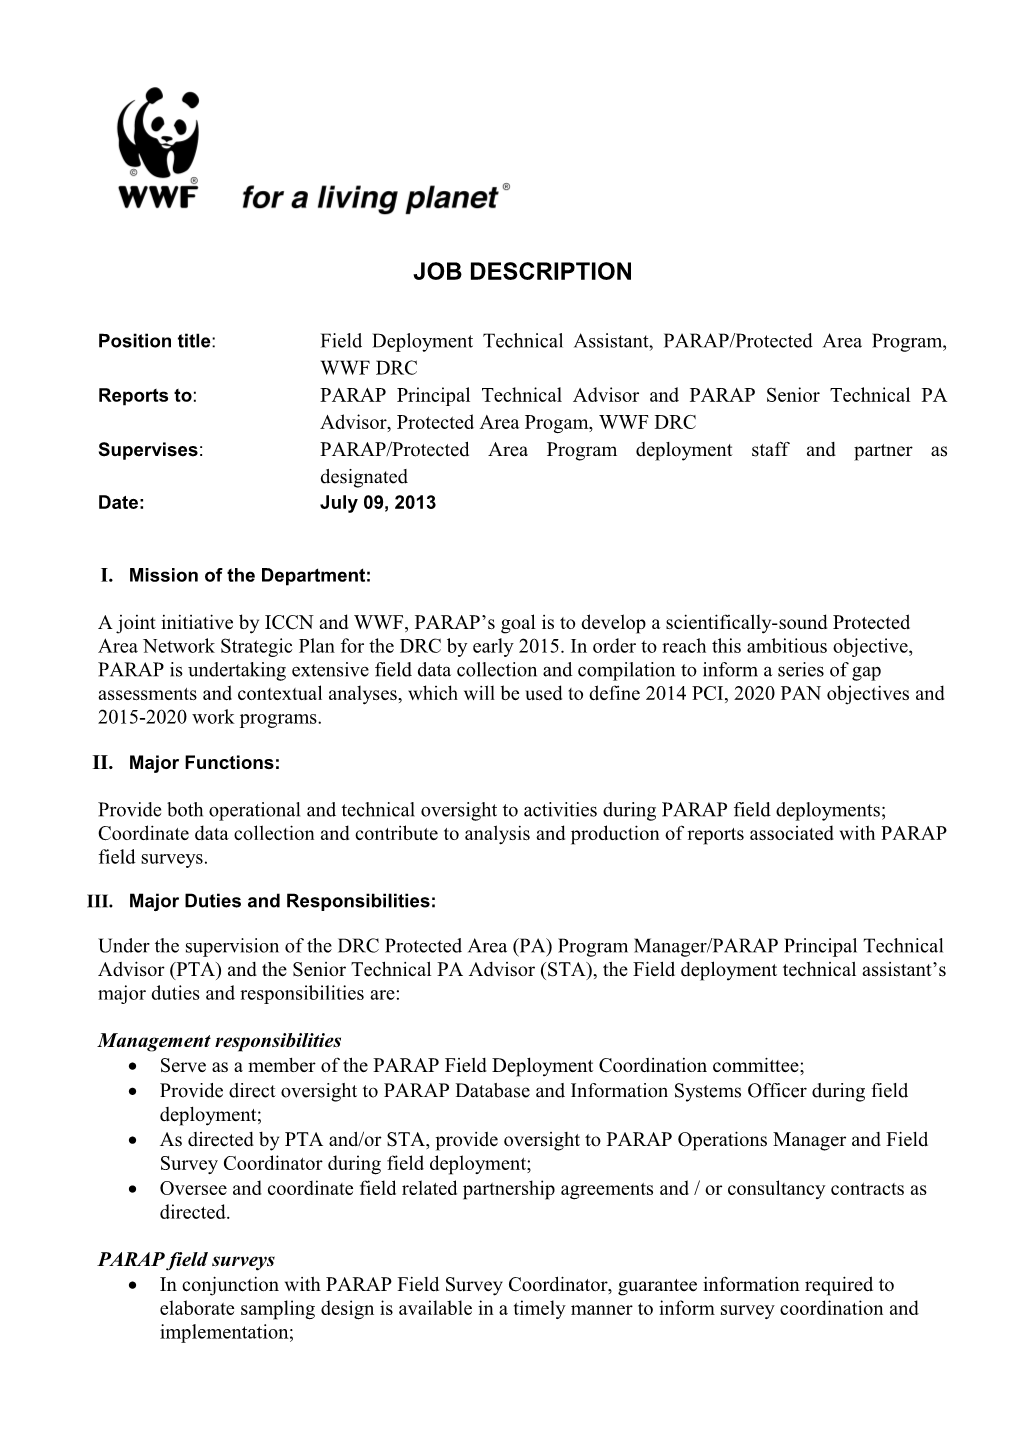 Position Title:Field Deployment Technical Assistant, PARAP/Protected Area Program, WWF DRC